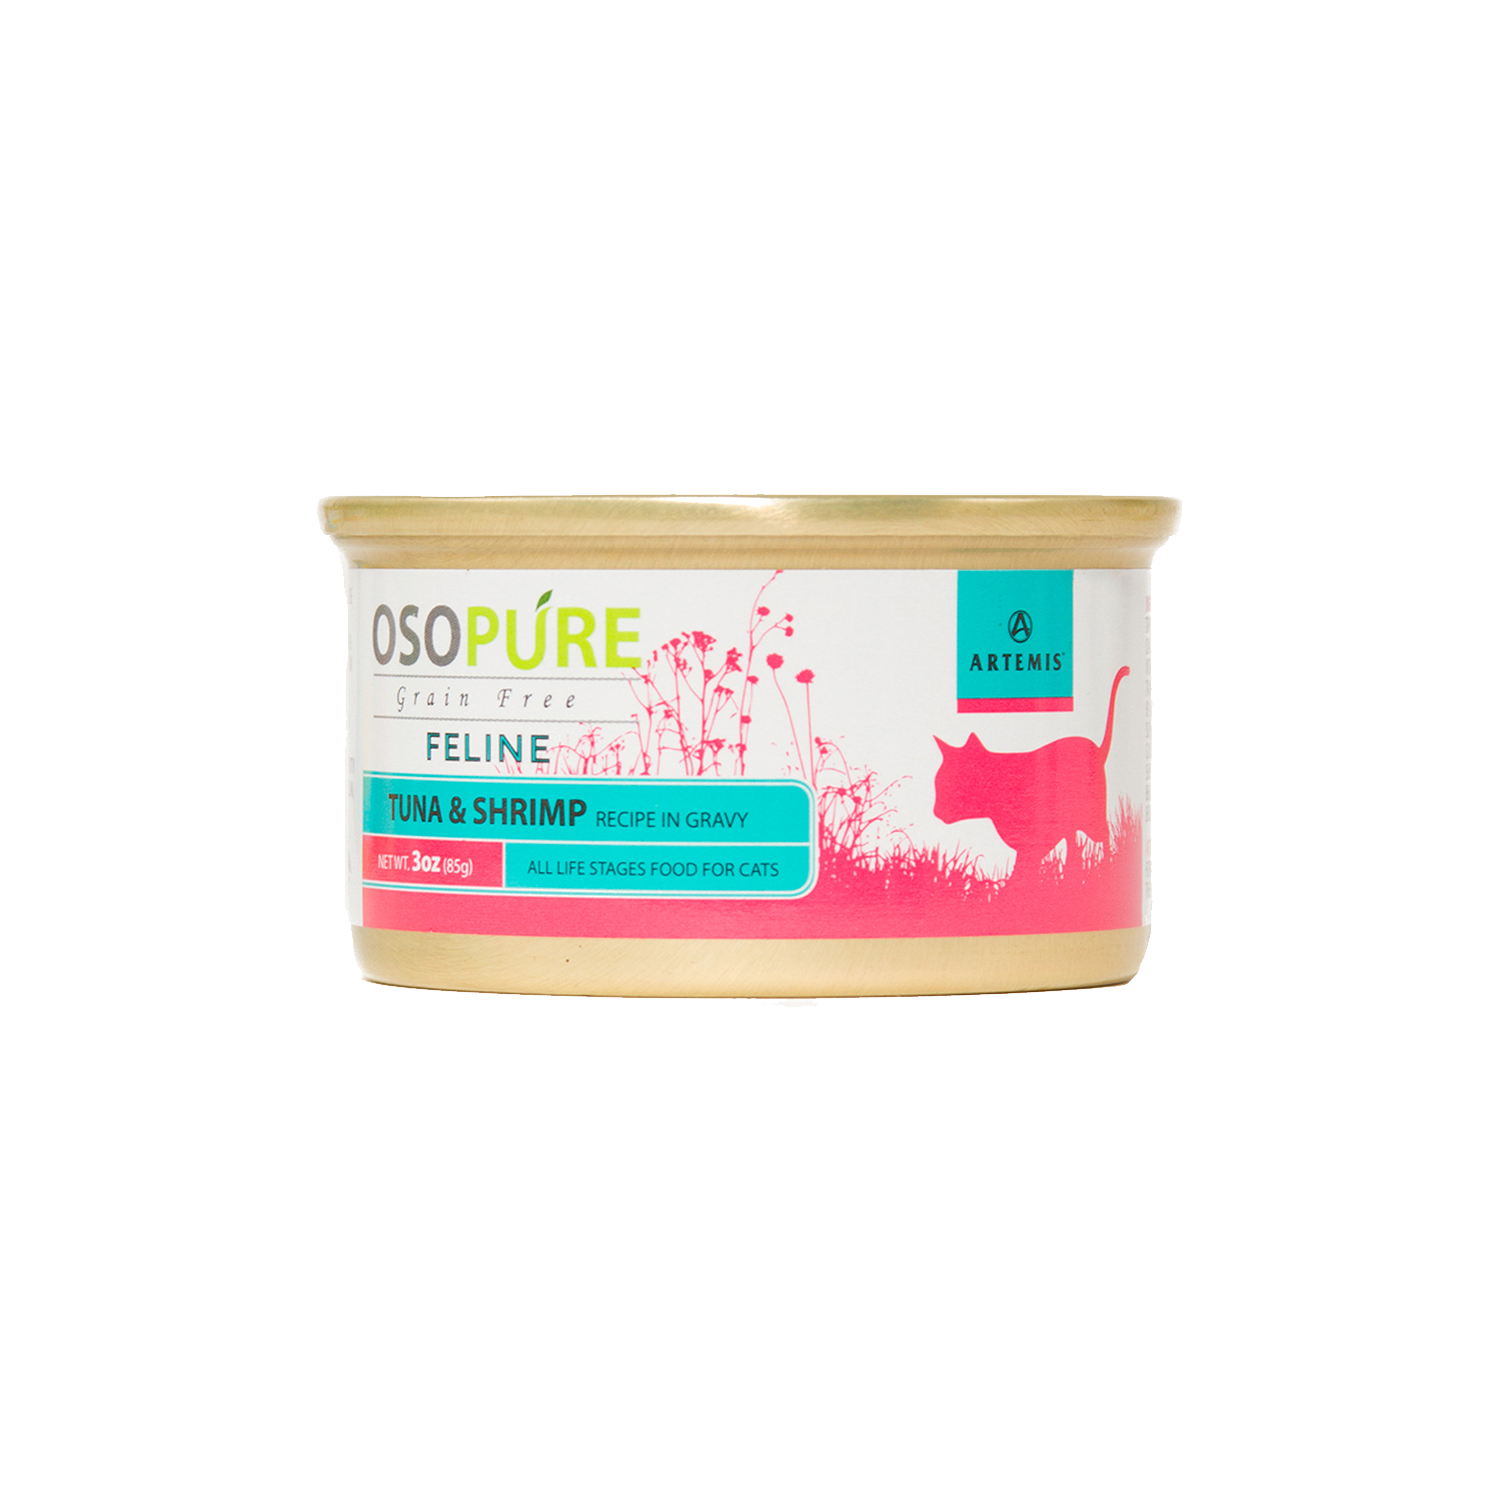 OSOPURE Feline Grain Free Tuna & Shrimp Canned Cat Food (24 pack)